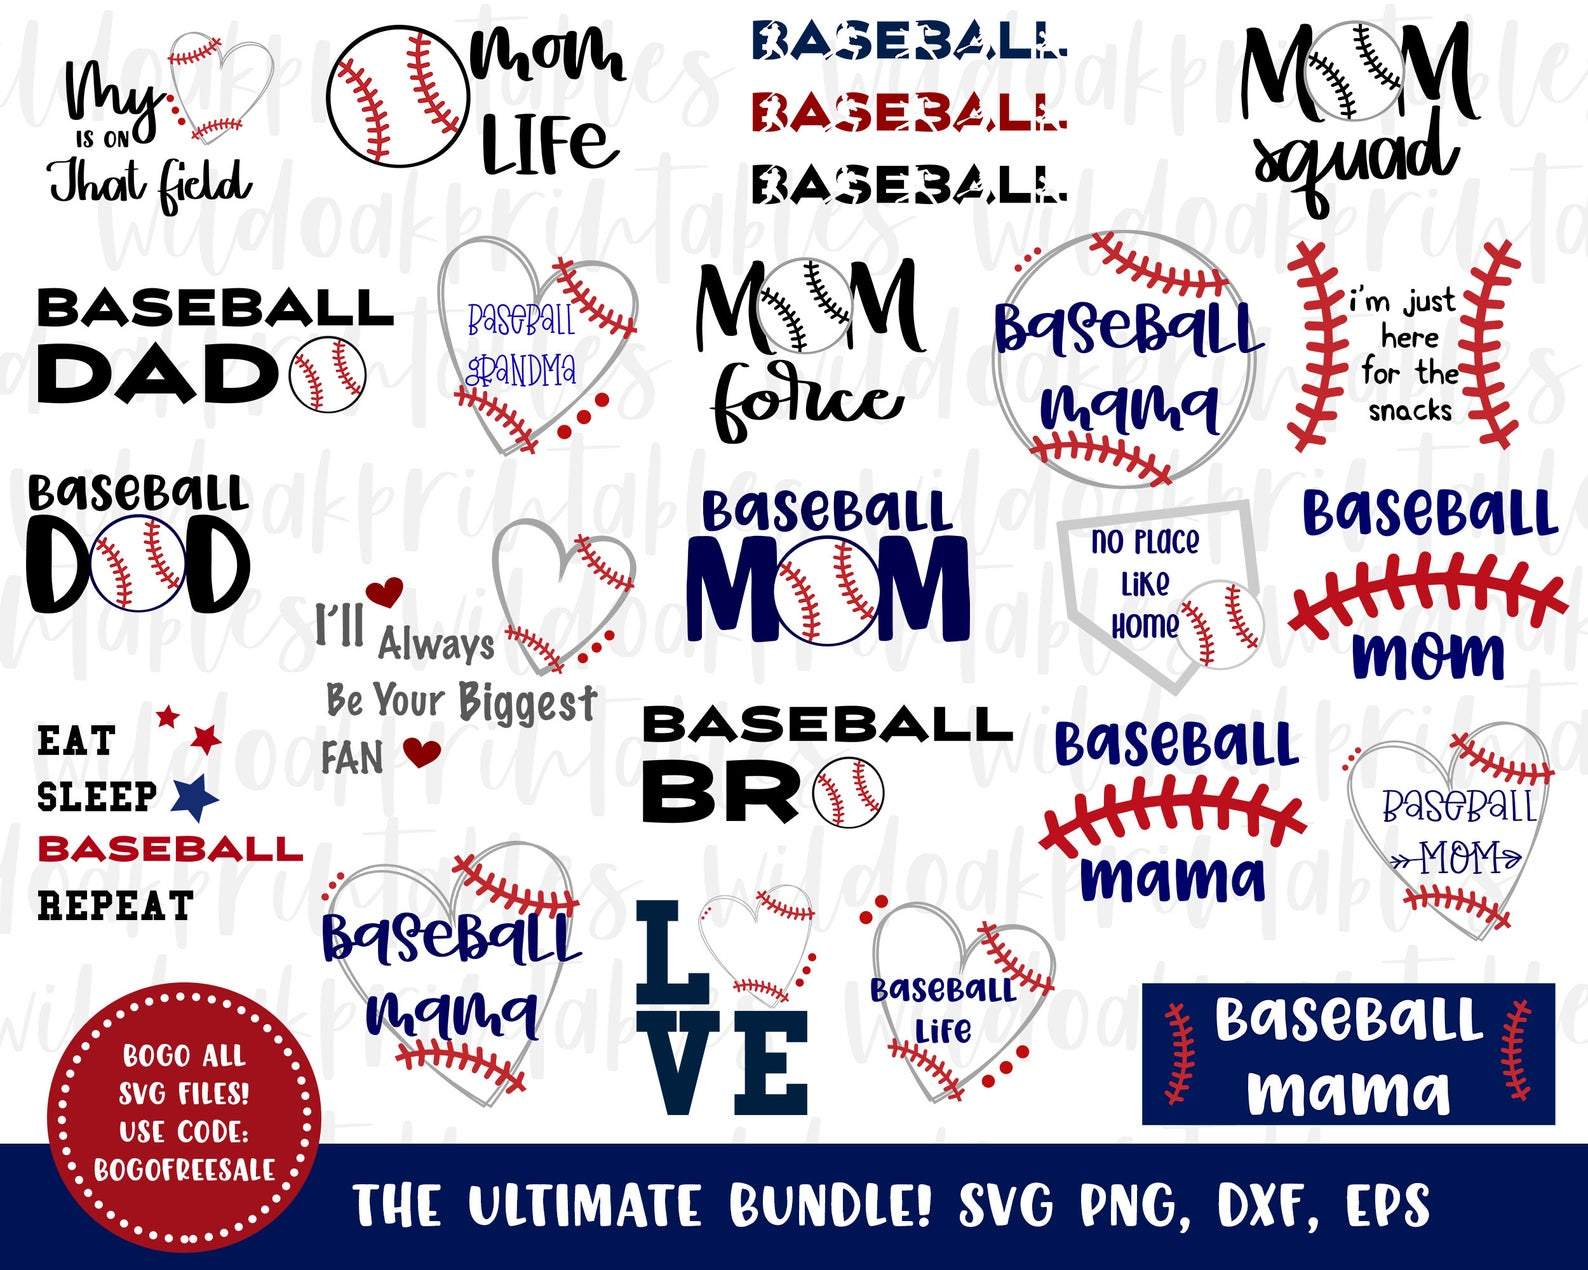 Back to School SVG Bundle - Baseball All Star